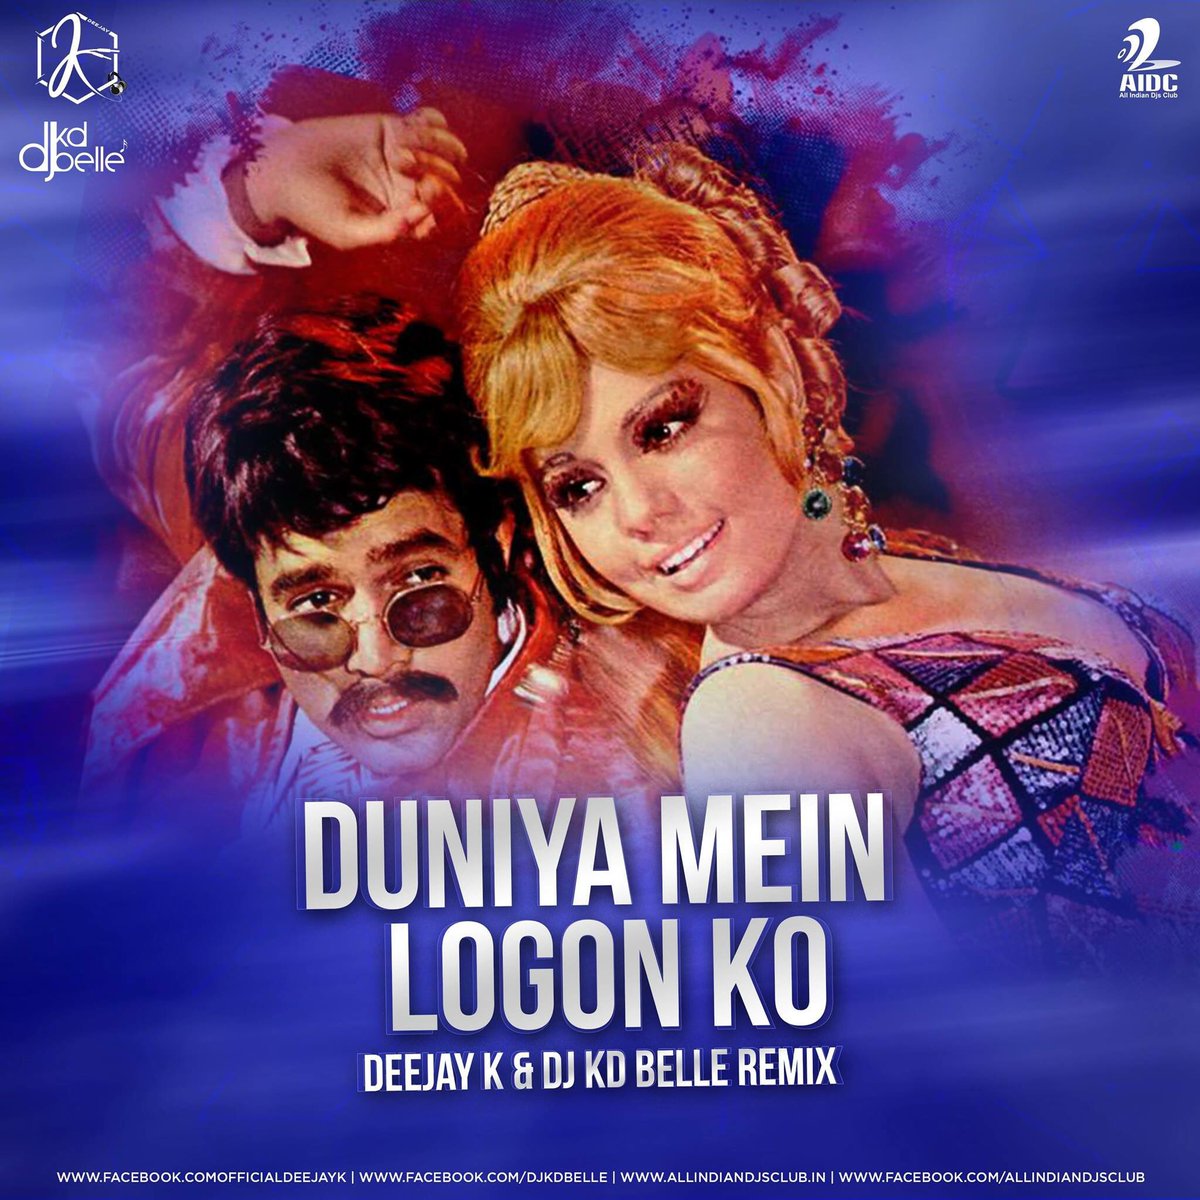 Duniya Mein Logon Ko (Remix) - Deejay K & DJ KD Belle

Download: allindiandjsclub.in/dmlkkkdb

#duniyameinlogonko #deejayk #djkdbelle #remix #aidc